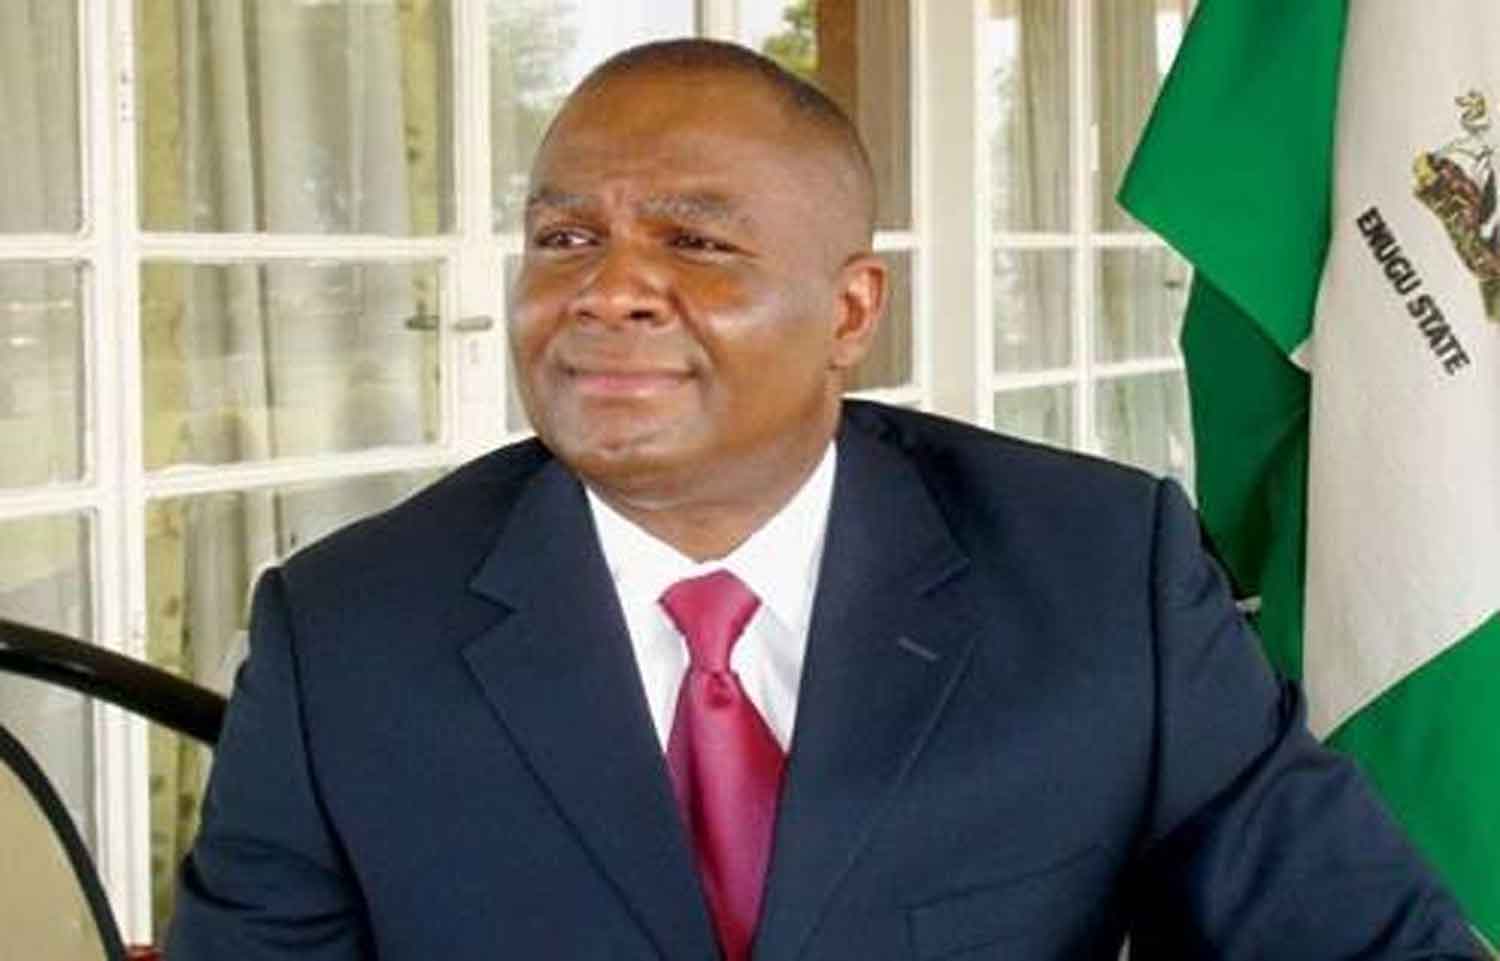 Enugu: Nnamani Quits PDP After Losing Senate Seat To LP Candidate